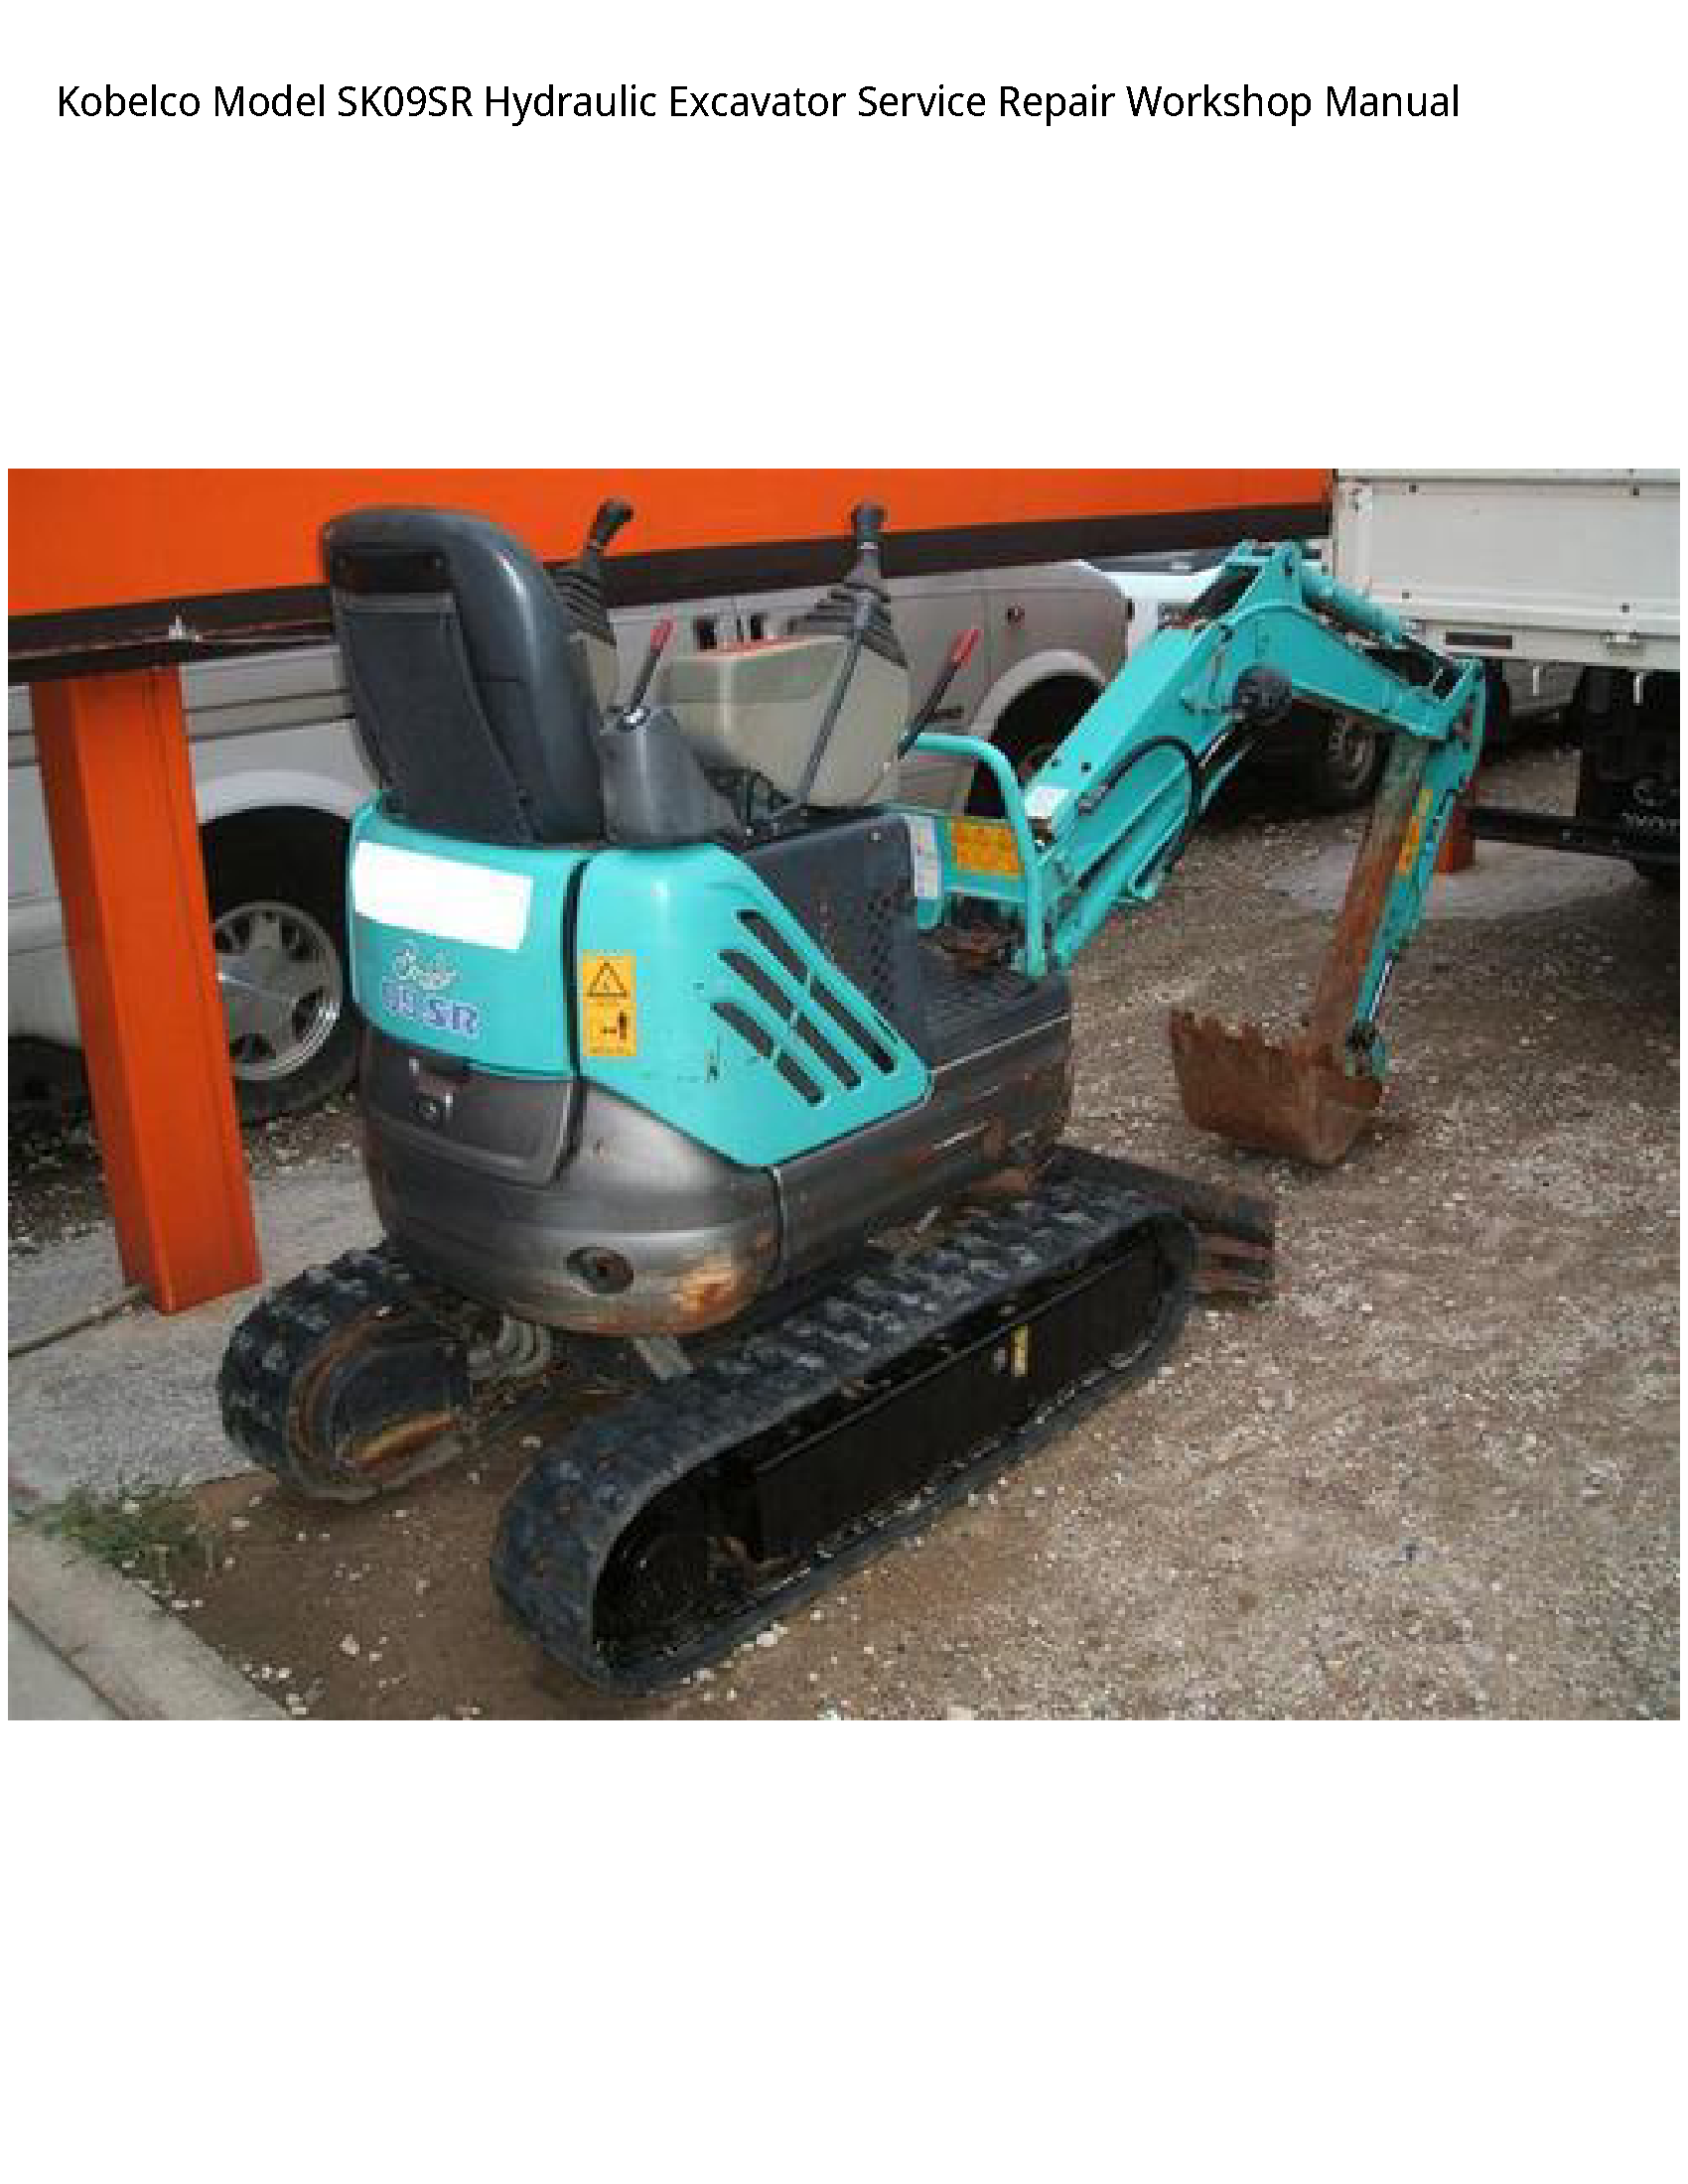 Kobelco SK09SR Model Hydraulic Excavator manual